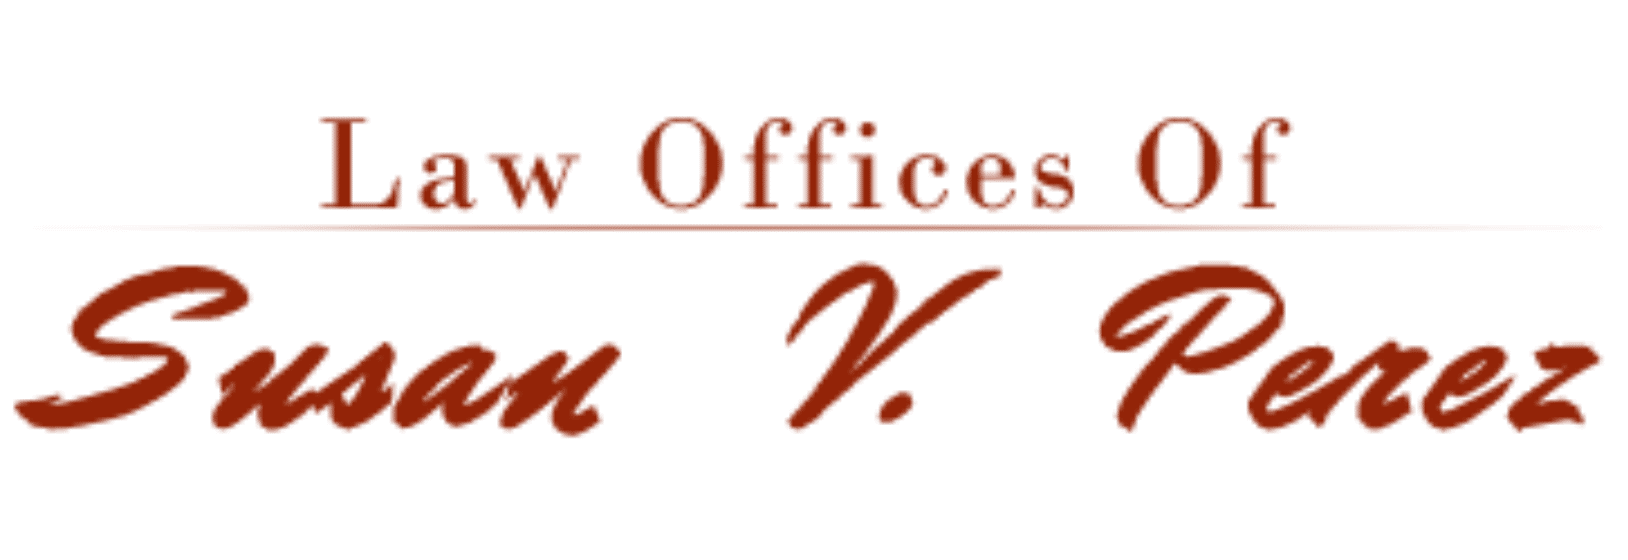 Susan V Perez Law Offices - Logo